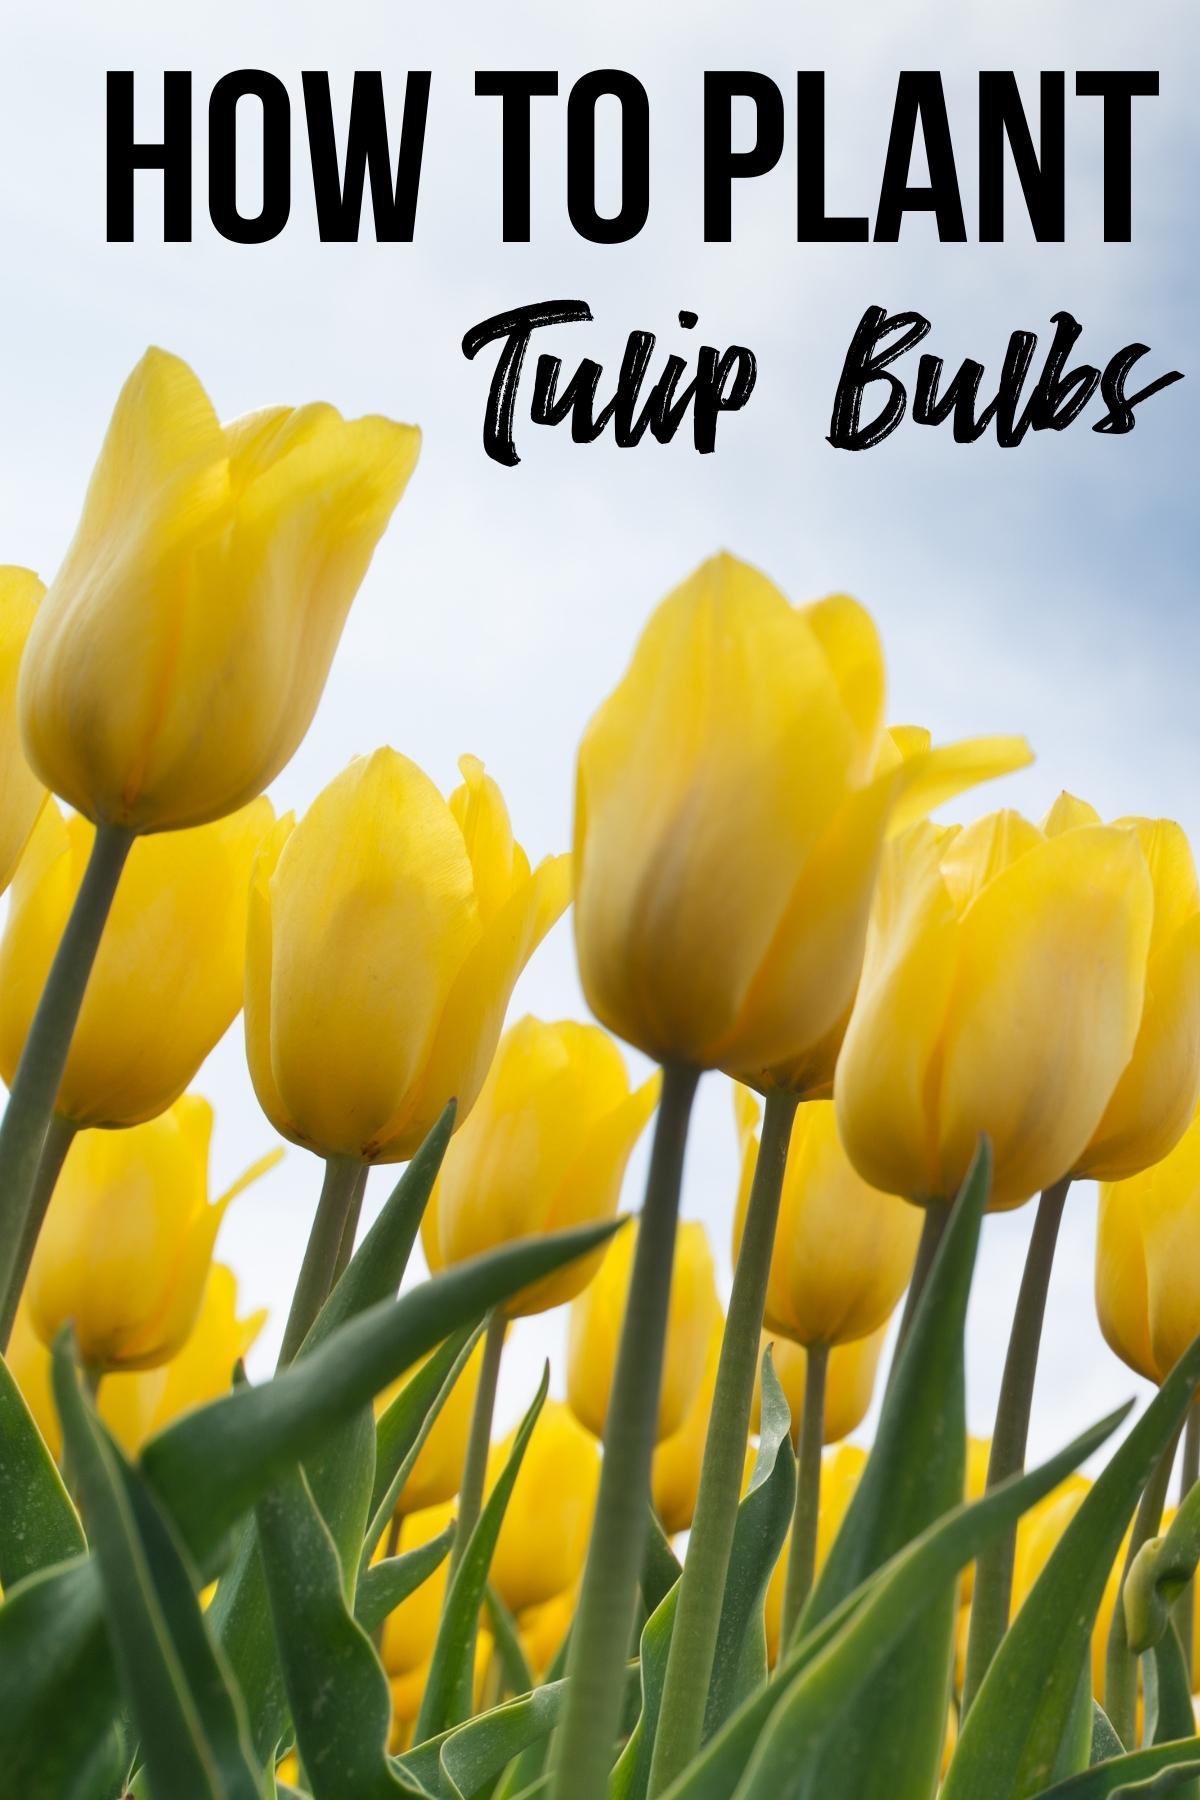 How to plant tulip bulbs